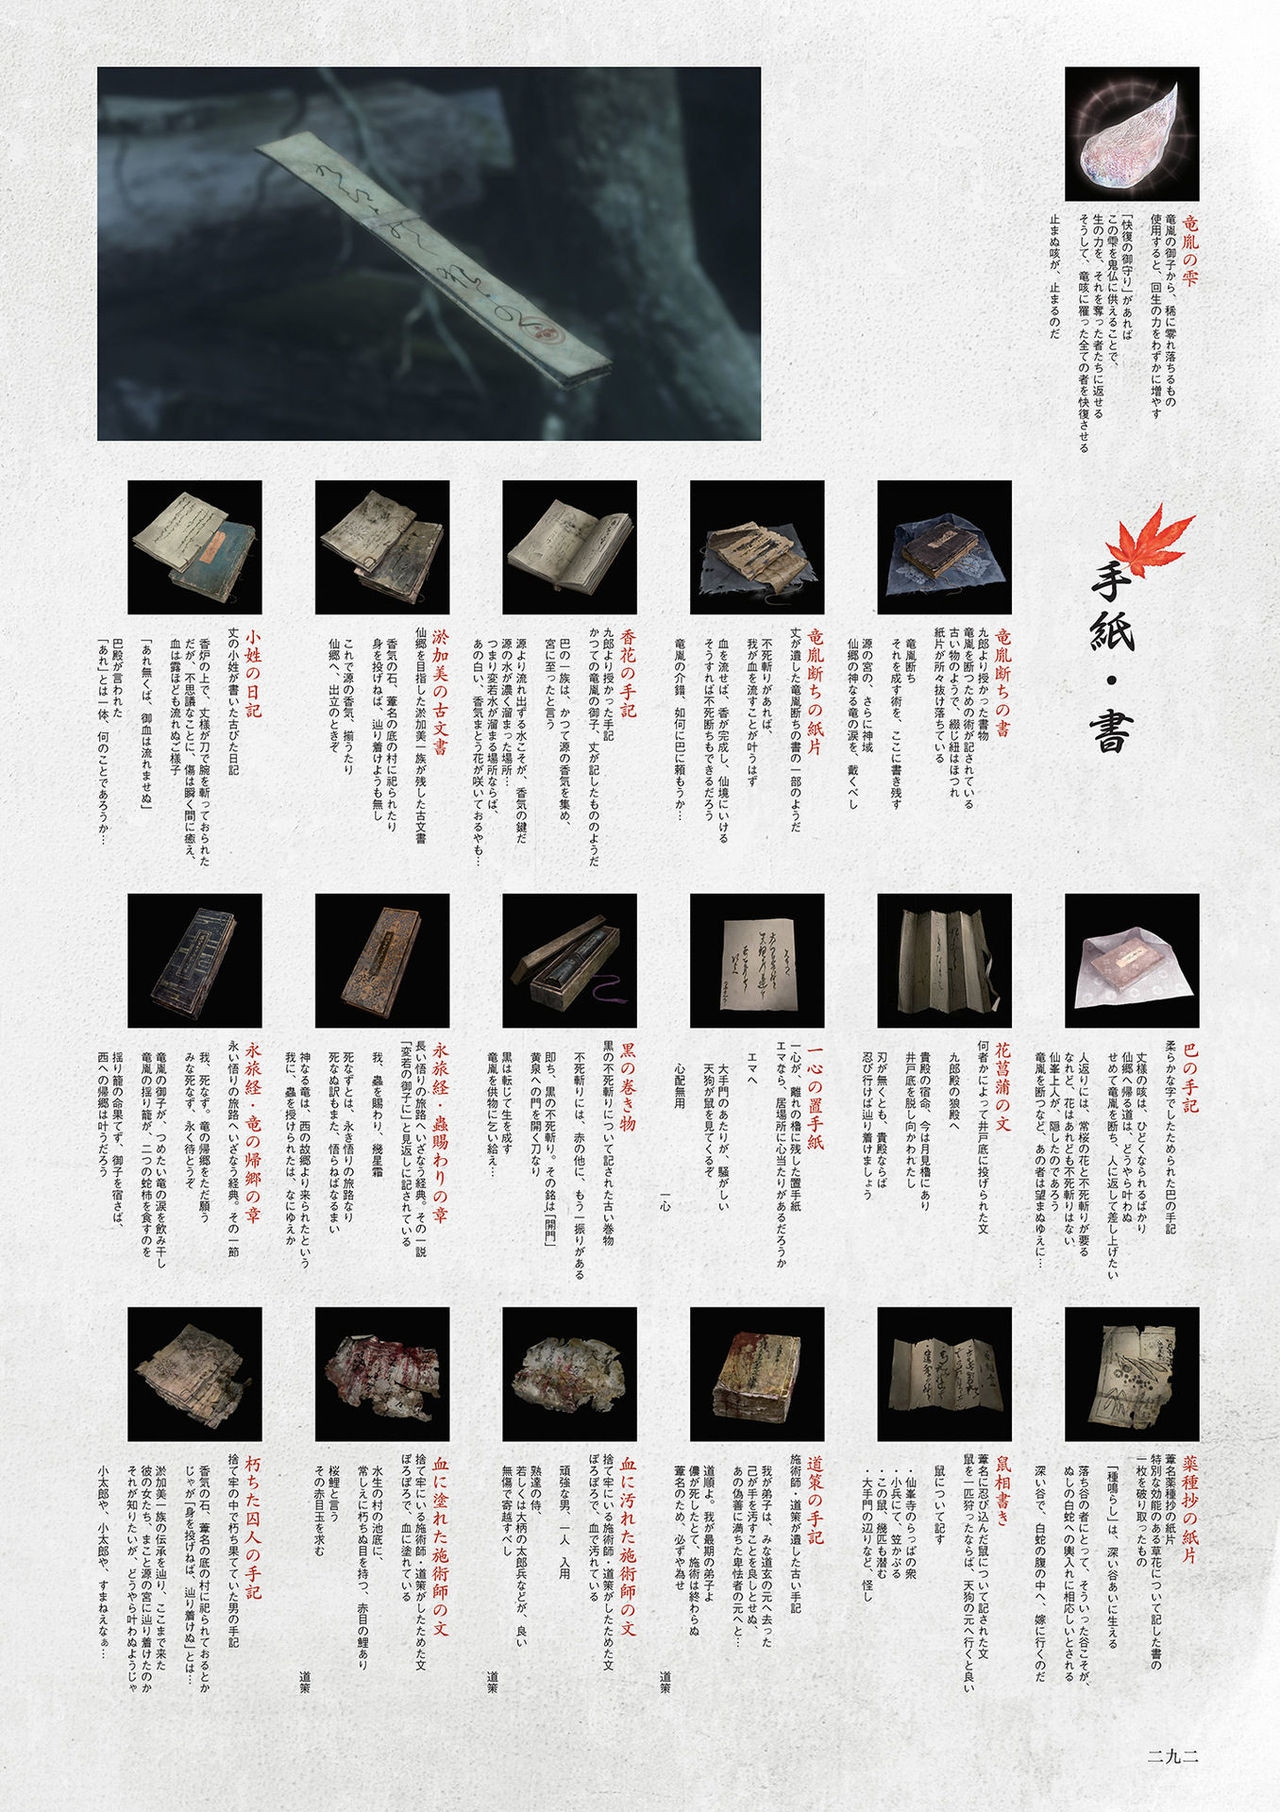 SEKIRO - SHADOWS DIE TWICE Official Artworks 203